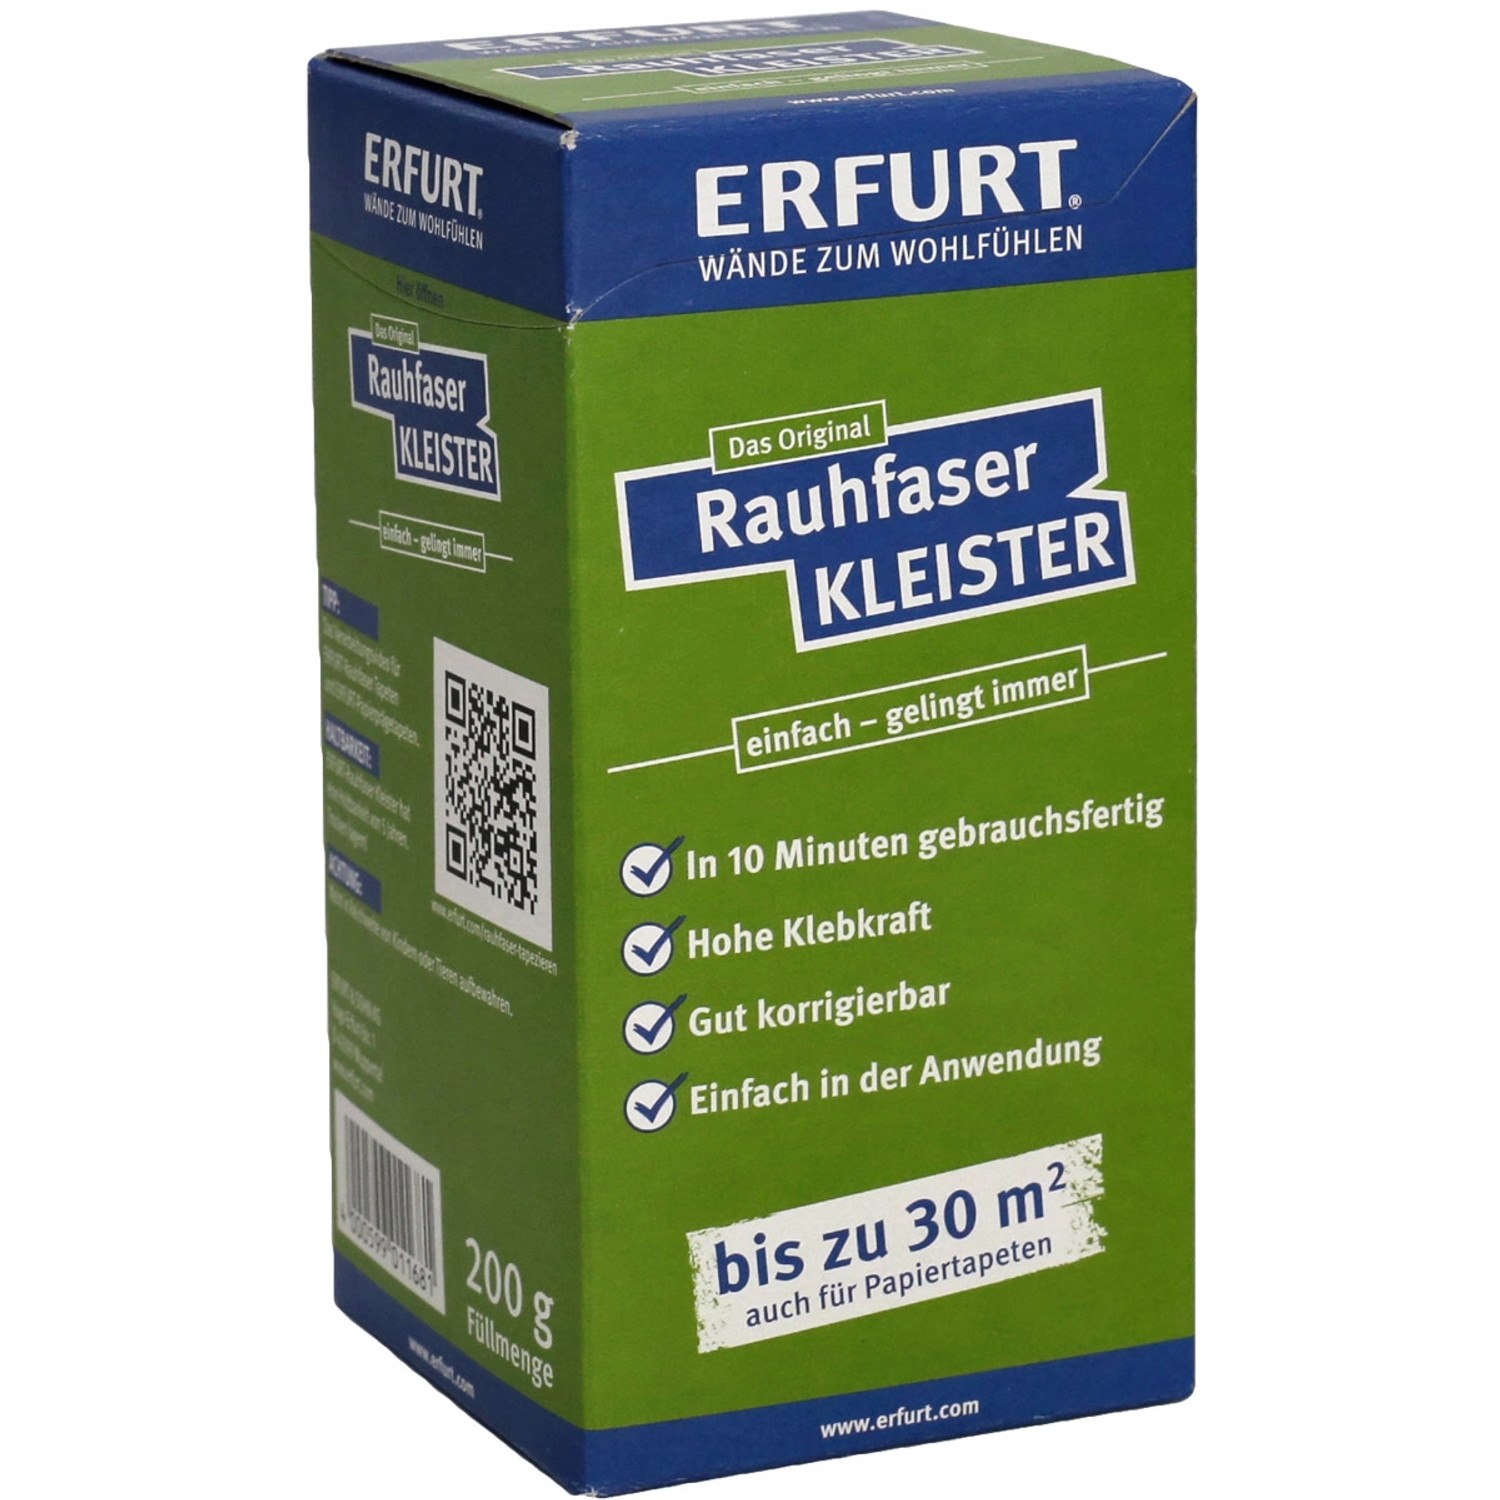 Erfurt Rauhfaser-Kleister 200 g